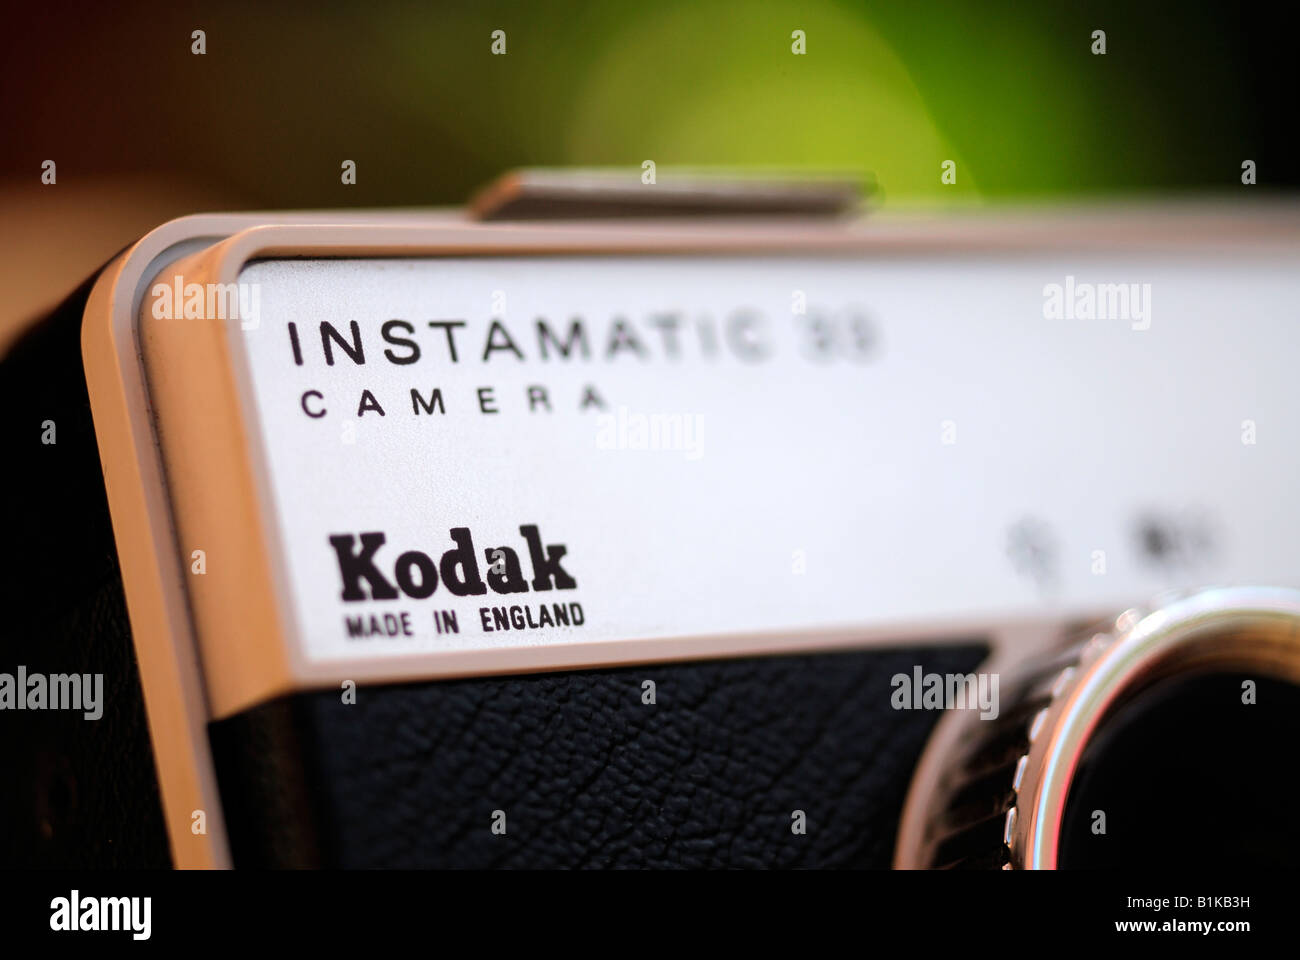 Kodak Instamatic 33 Telecamera cinematografica Foto Stock